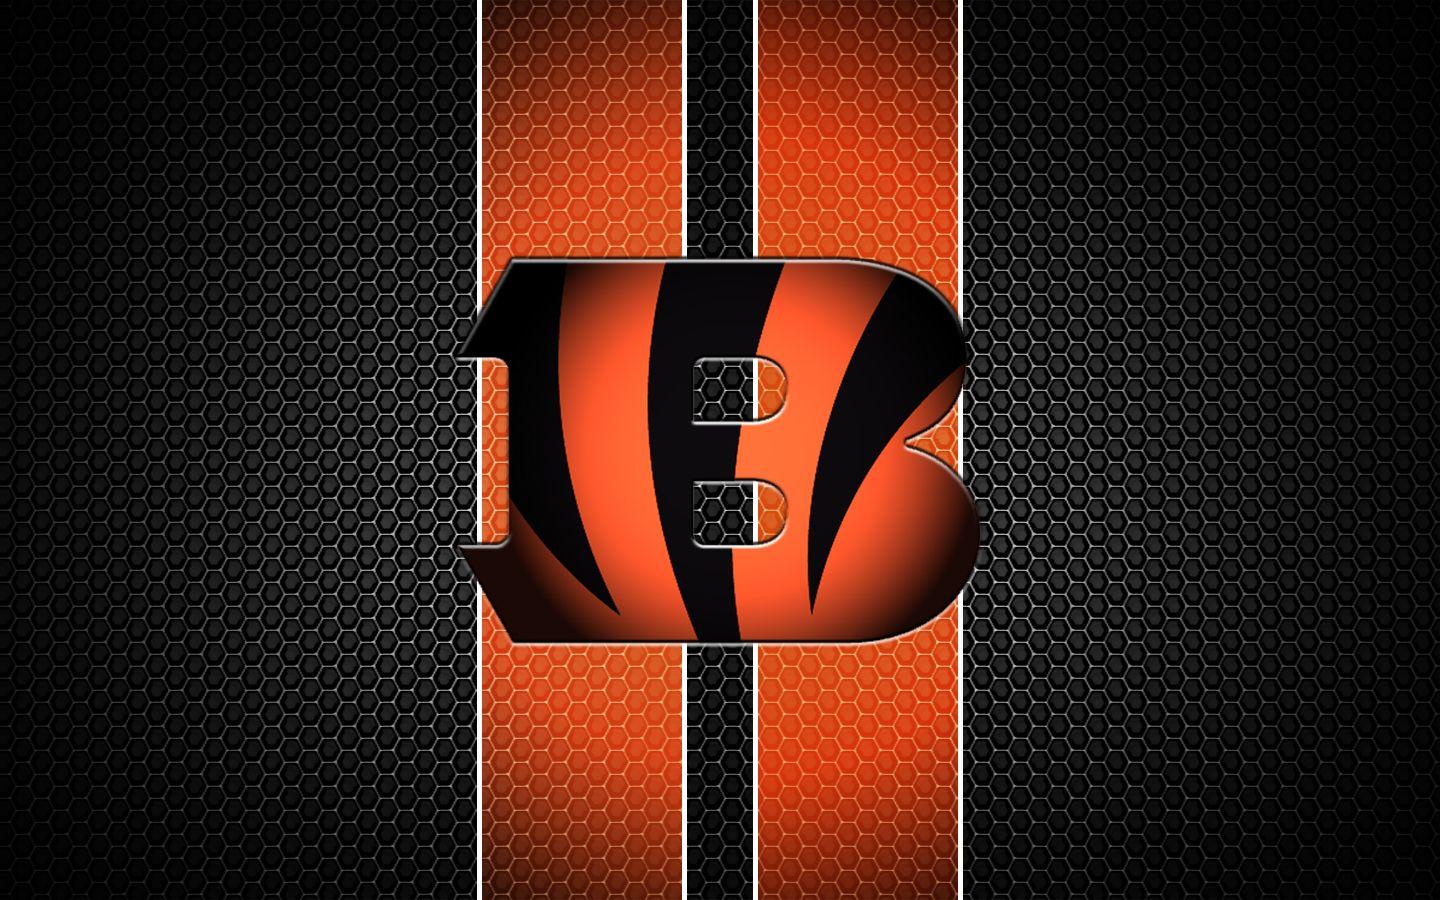 Cincinnati Team Logo - NFL Cincinnati Bengals Team Logo wallpaper 2018 in Football